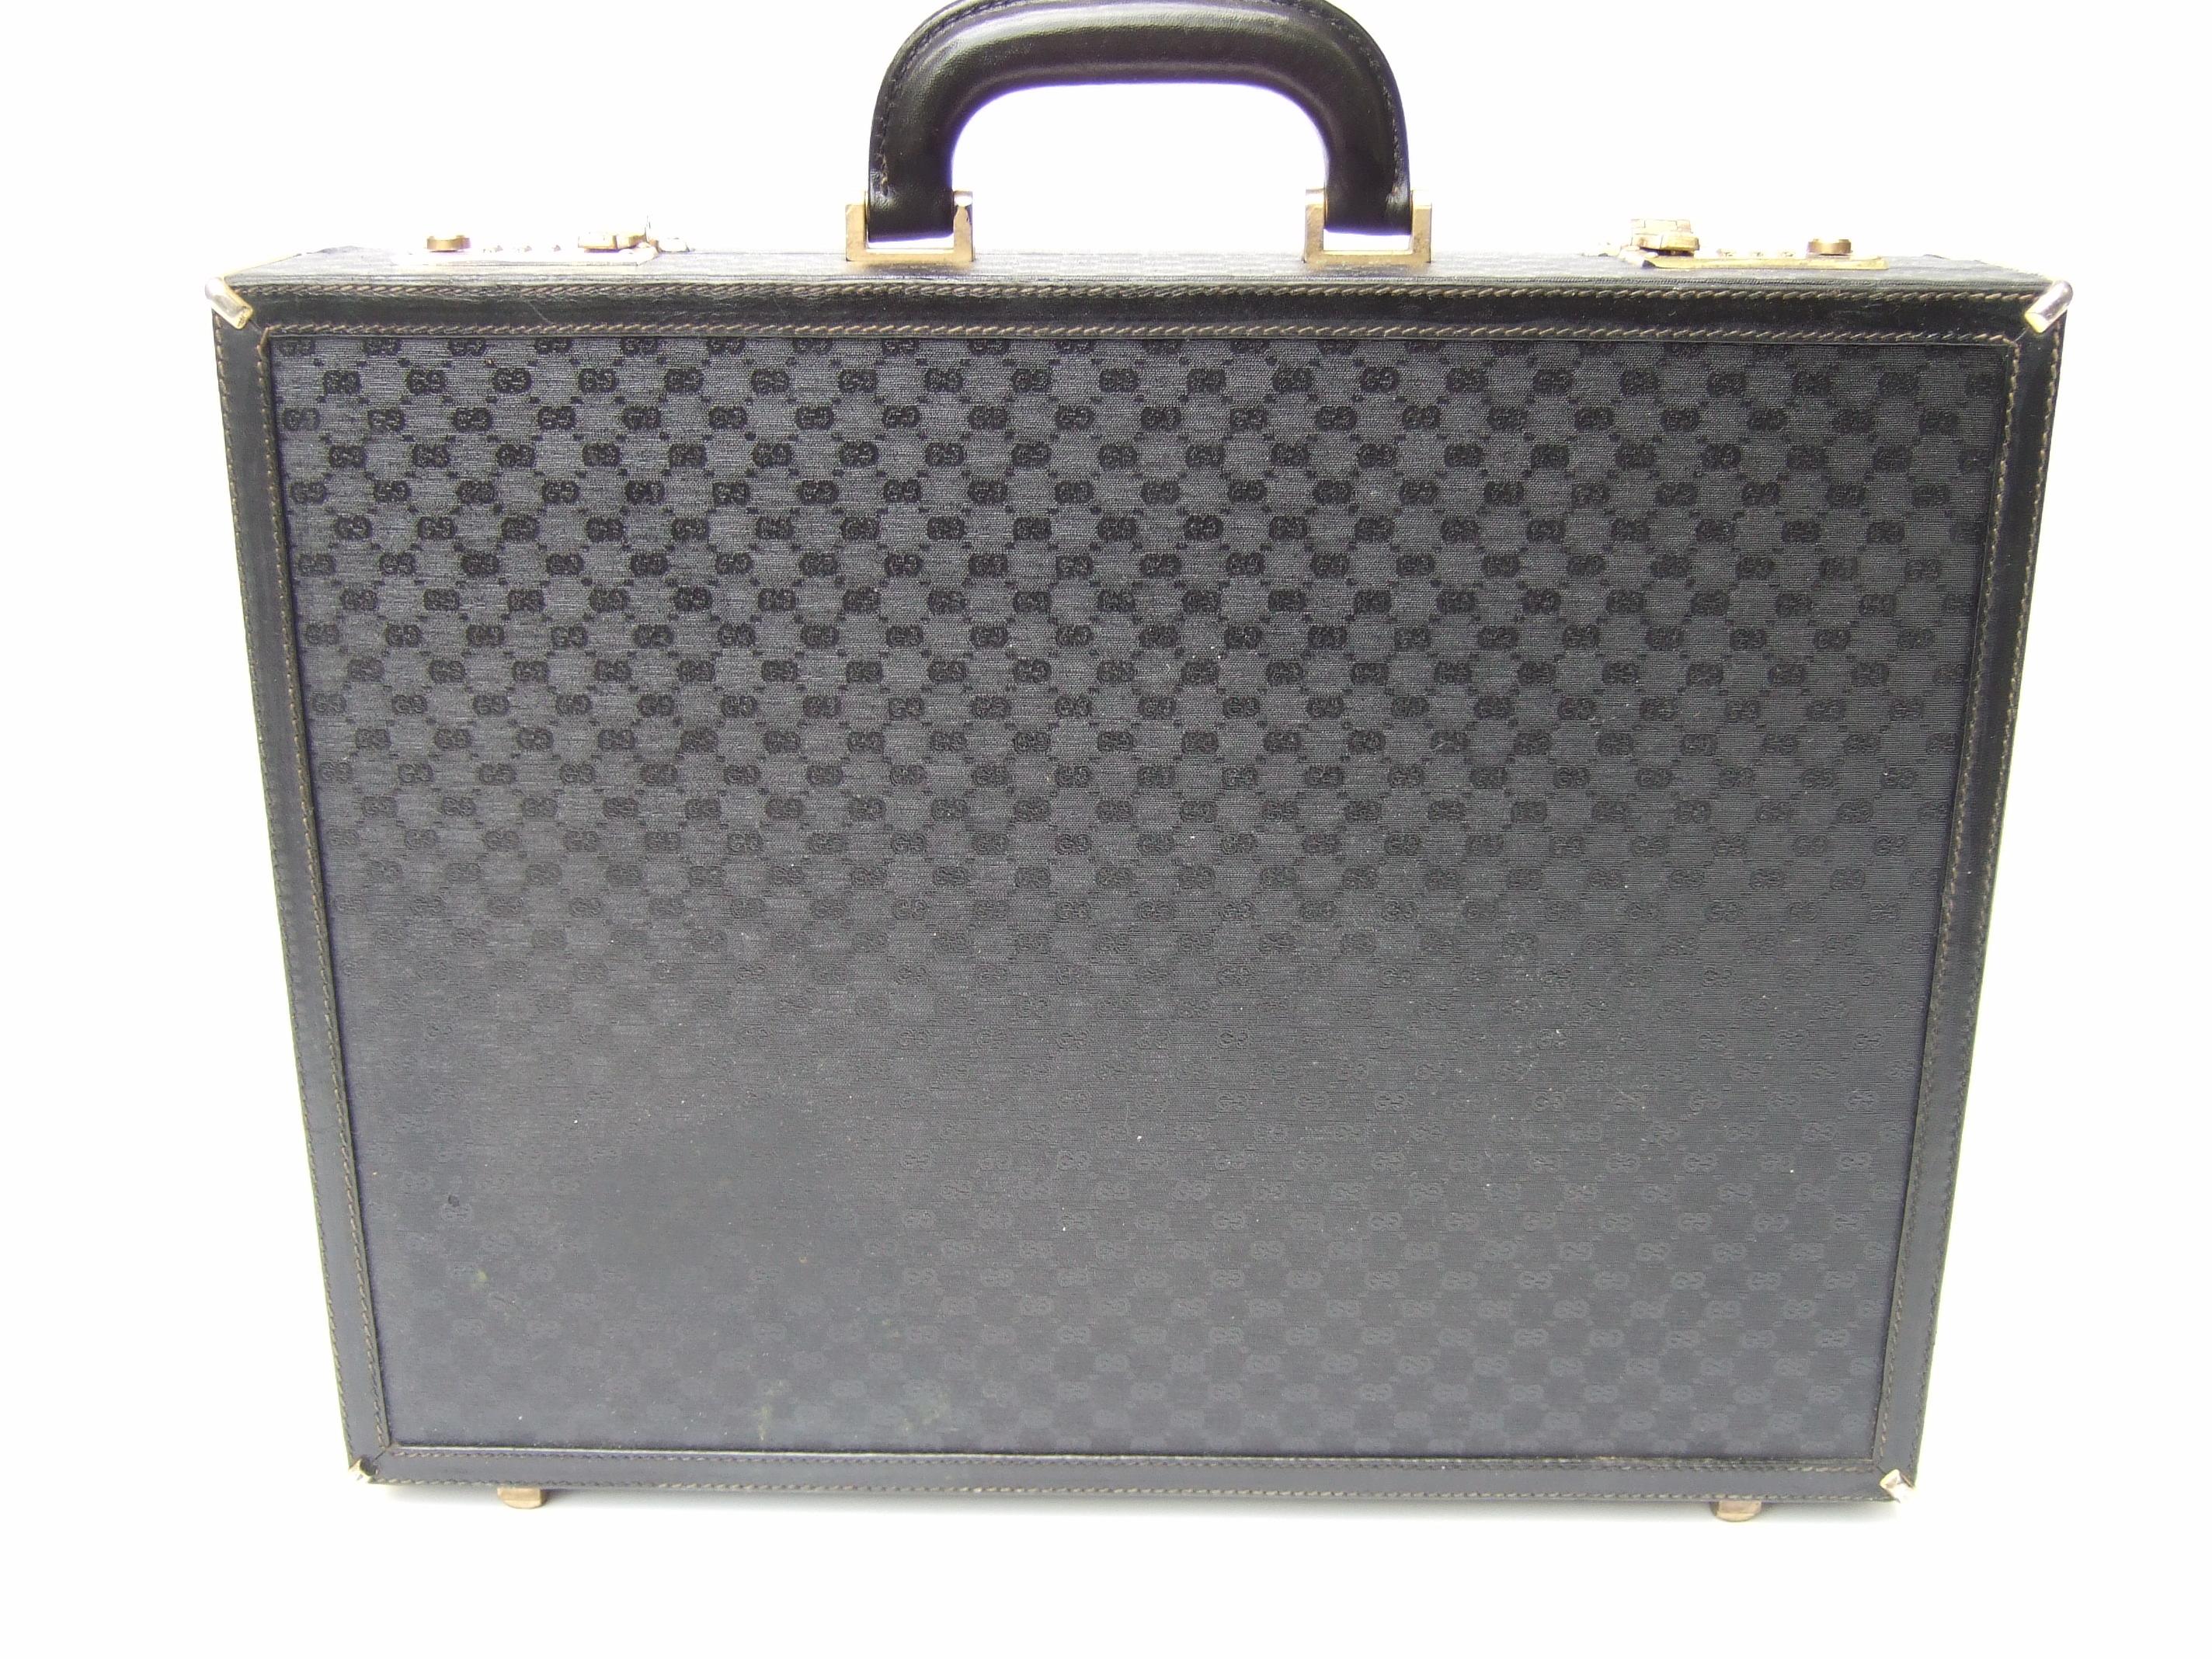 Gucci Italy Rare Black Coated Canvas Leather Trim Unisex Briefcase c 1980s 3